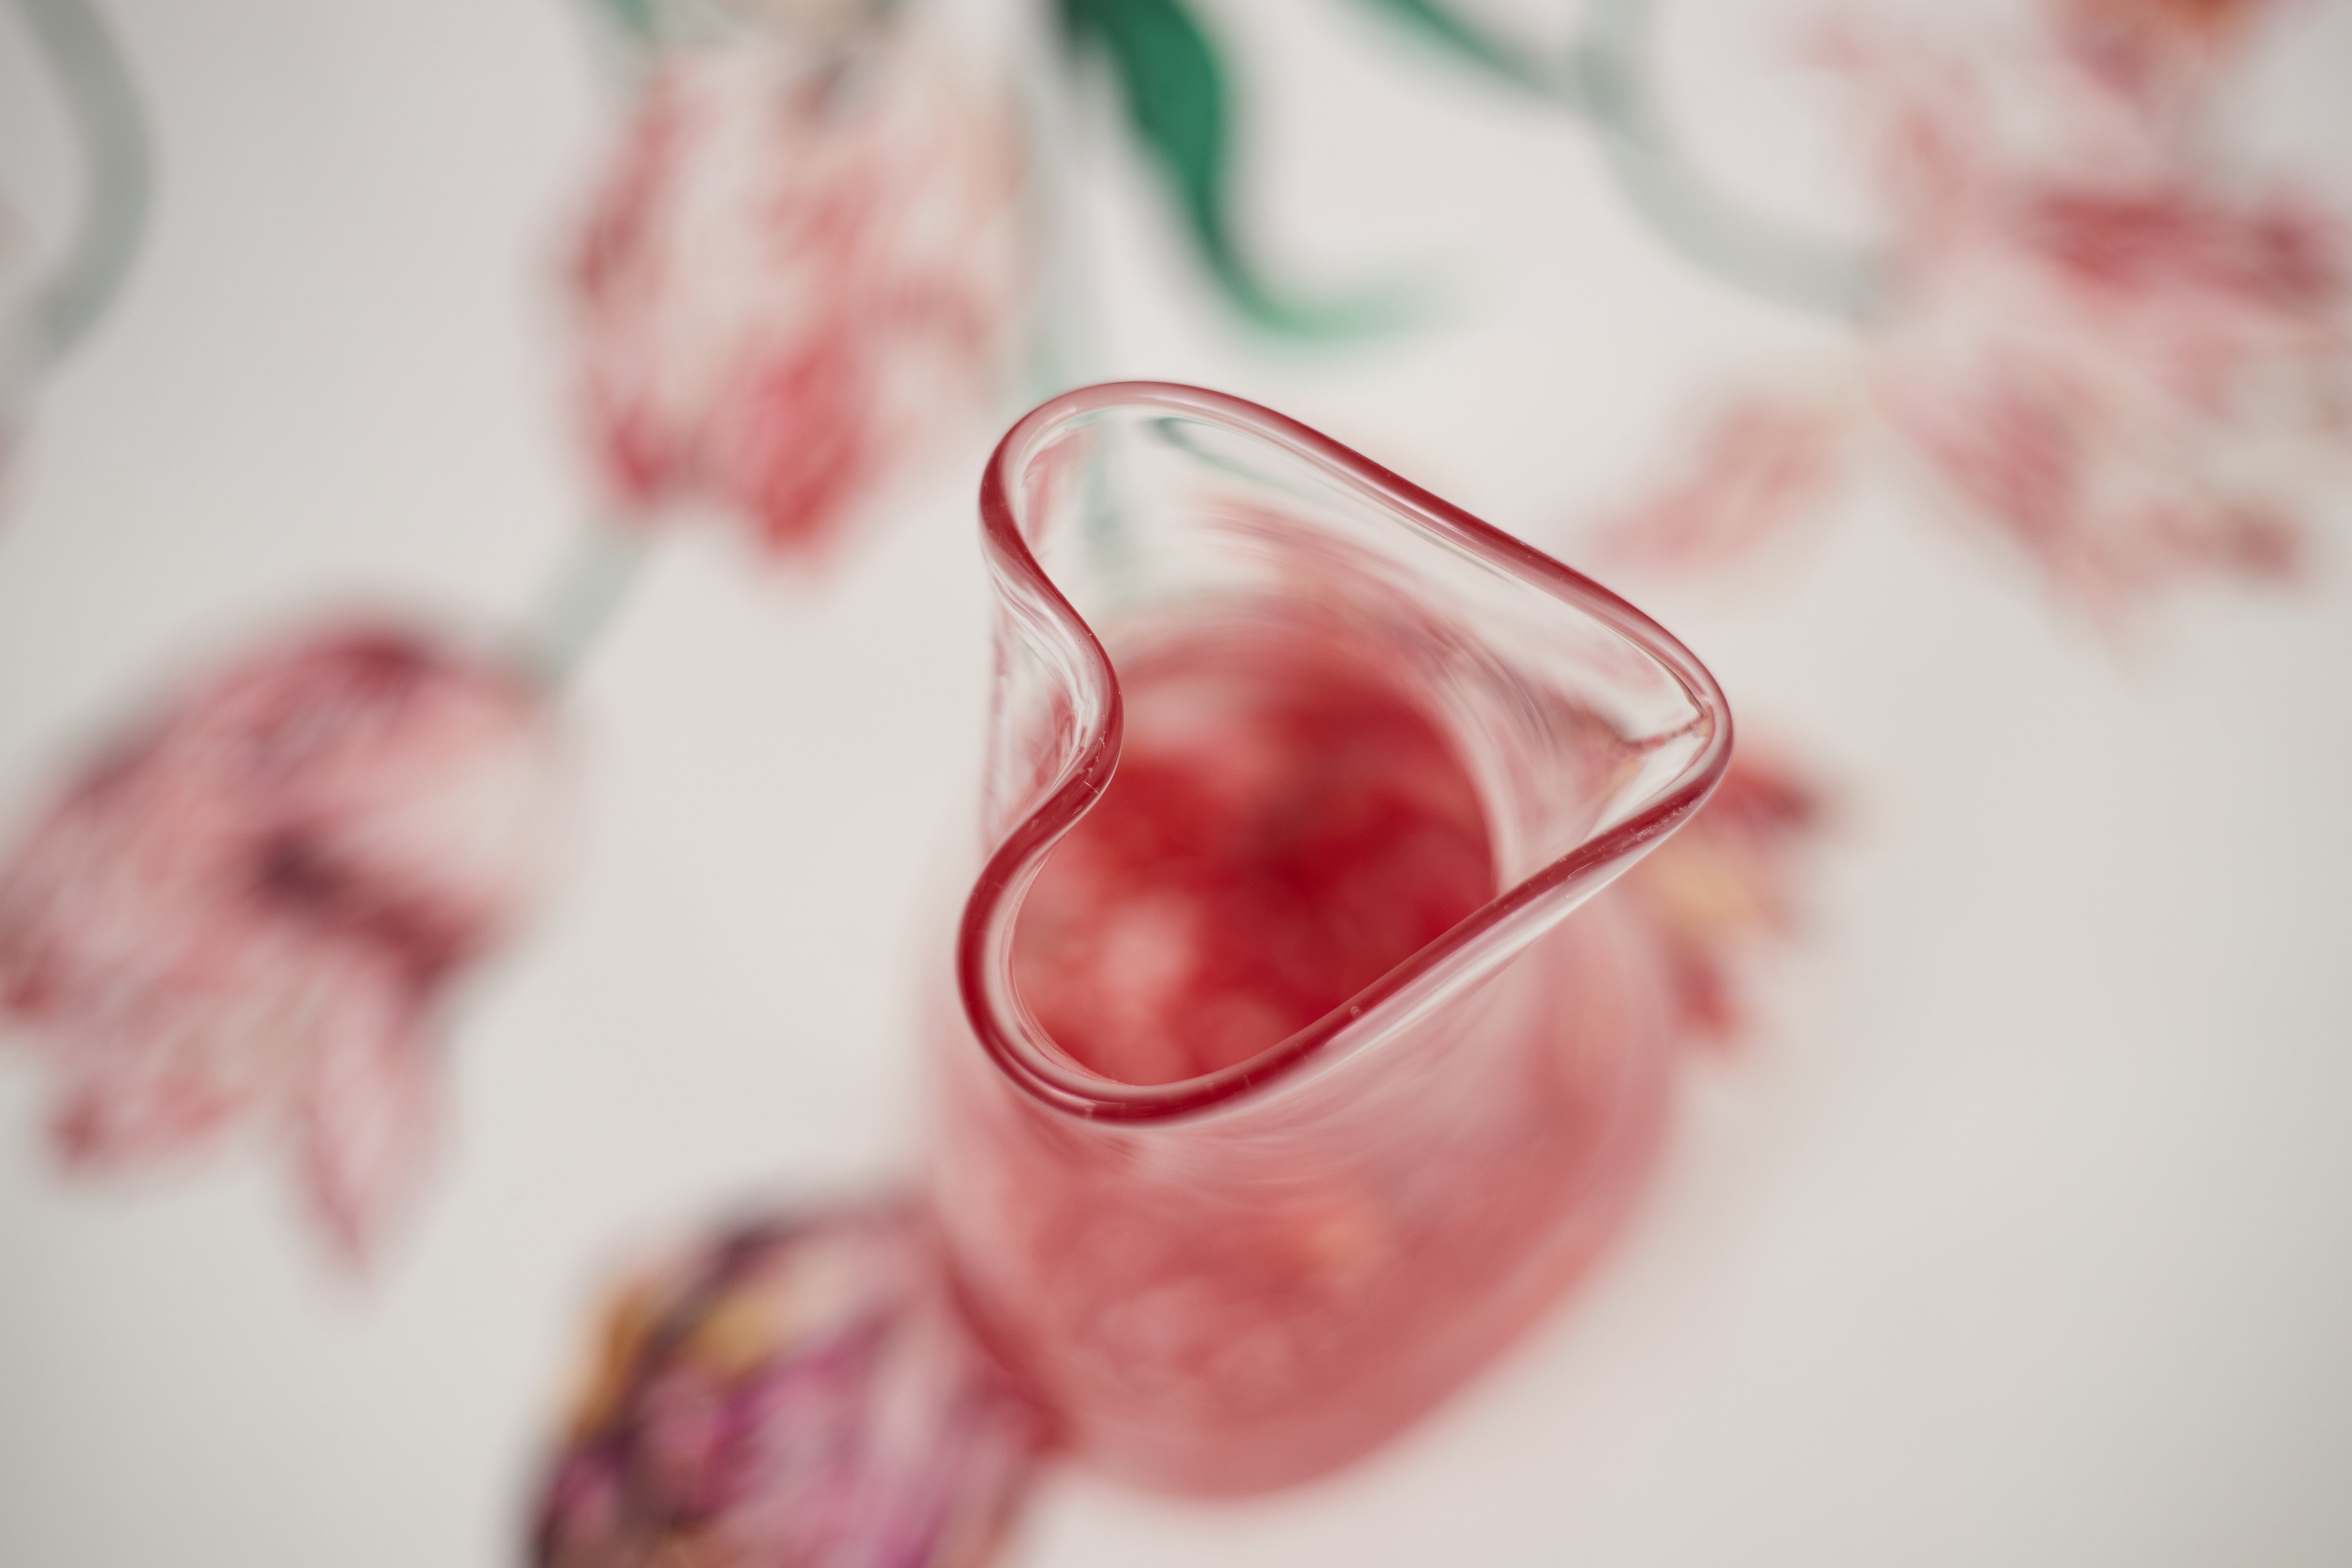 Glass Heart Vase in Red, 15cm